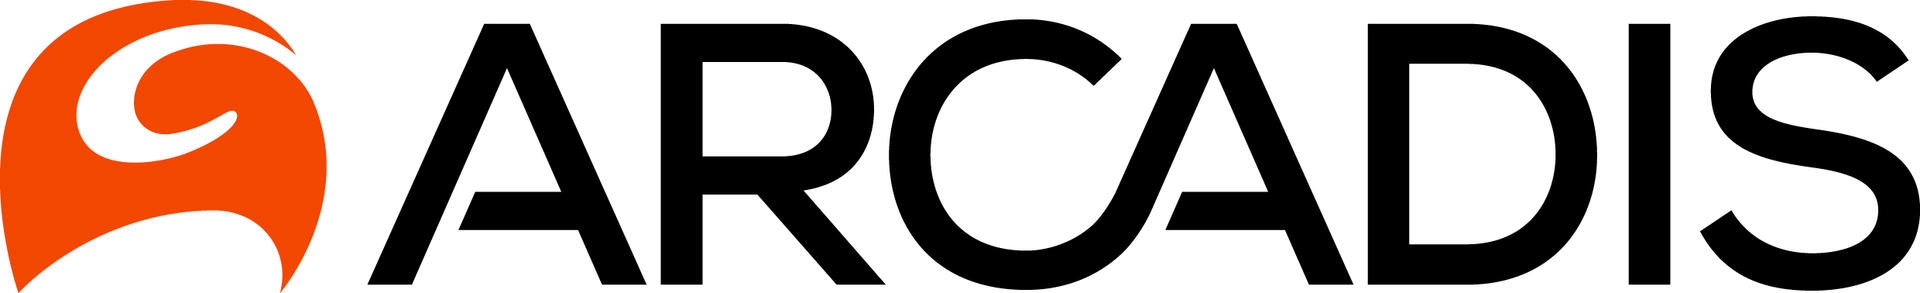 Logo Arcadis